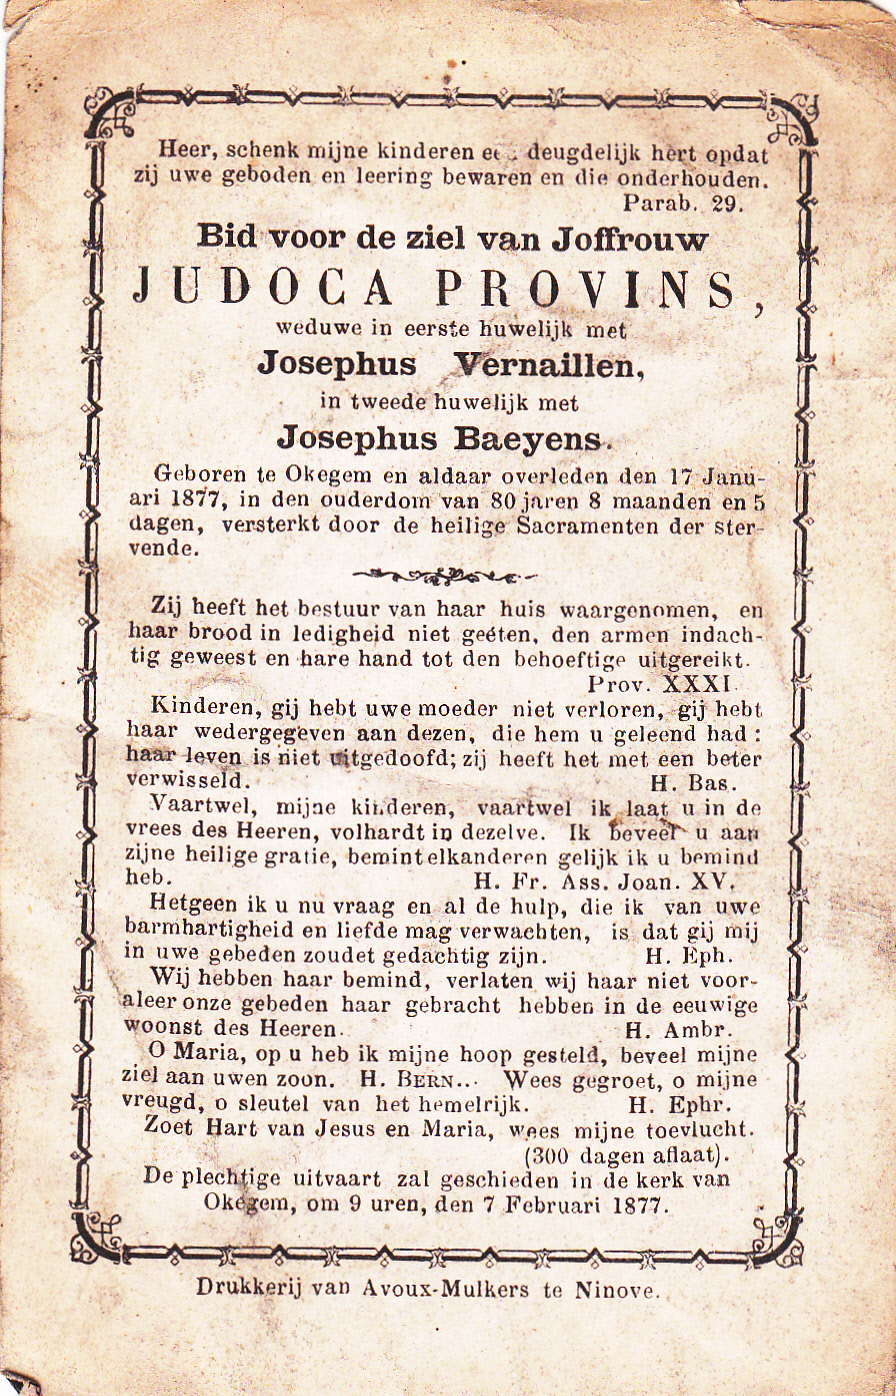 Provins Judoca